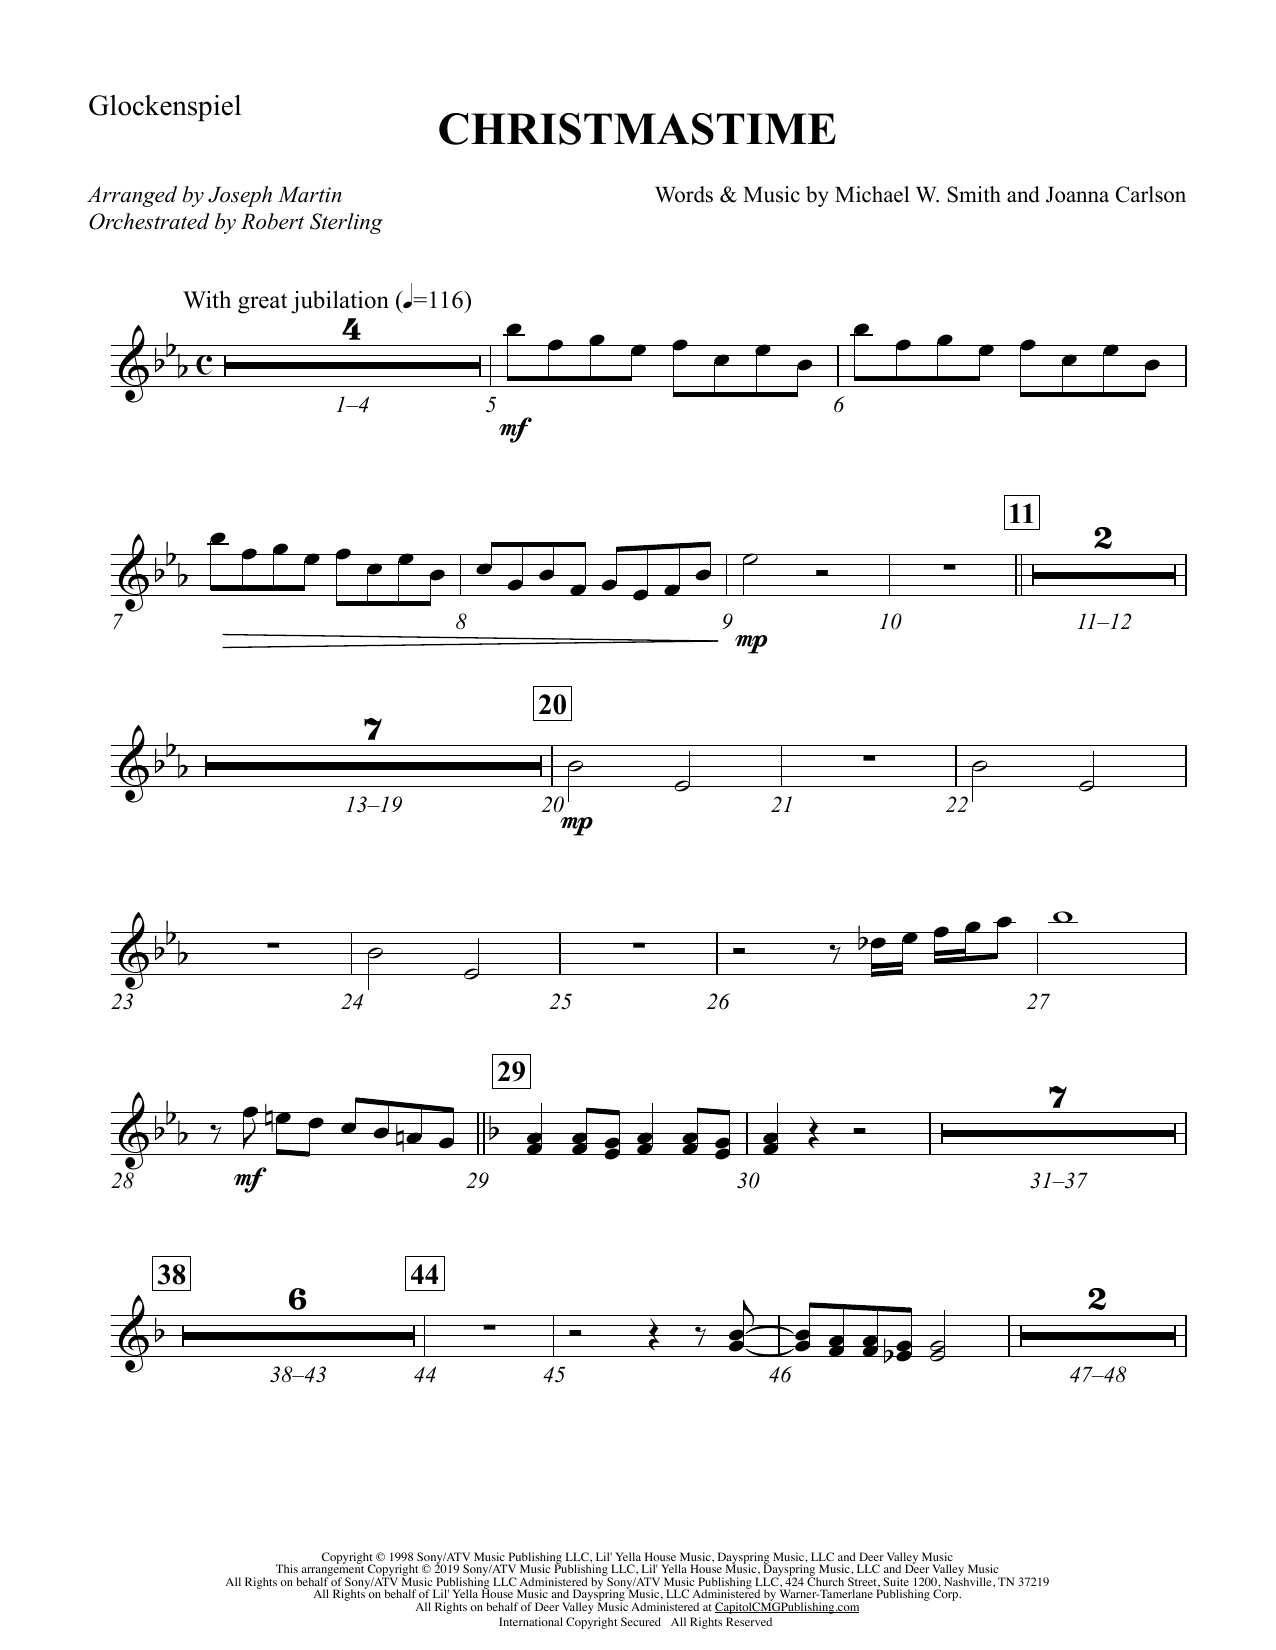 Michael W. Smith & Joanna Carlson Christmastime (arr. Joseph M. Martin) - Glockenspiel Sheet Music Notes & Chords for Choir Instrumental Pak - Download or Print PDF